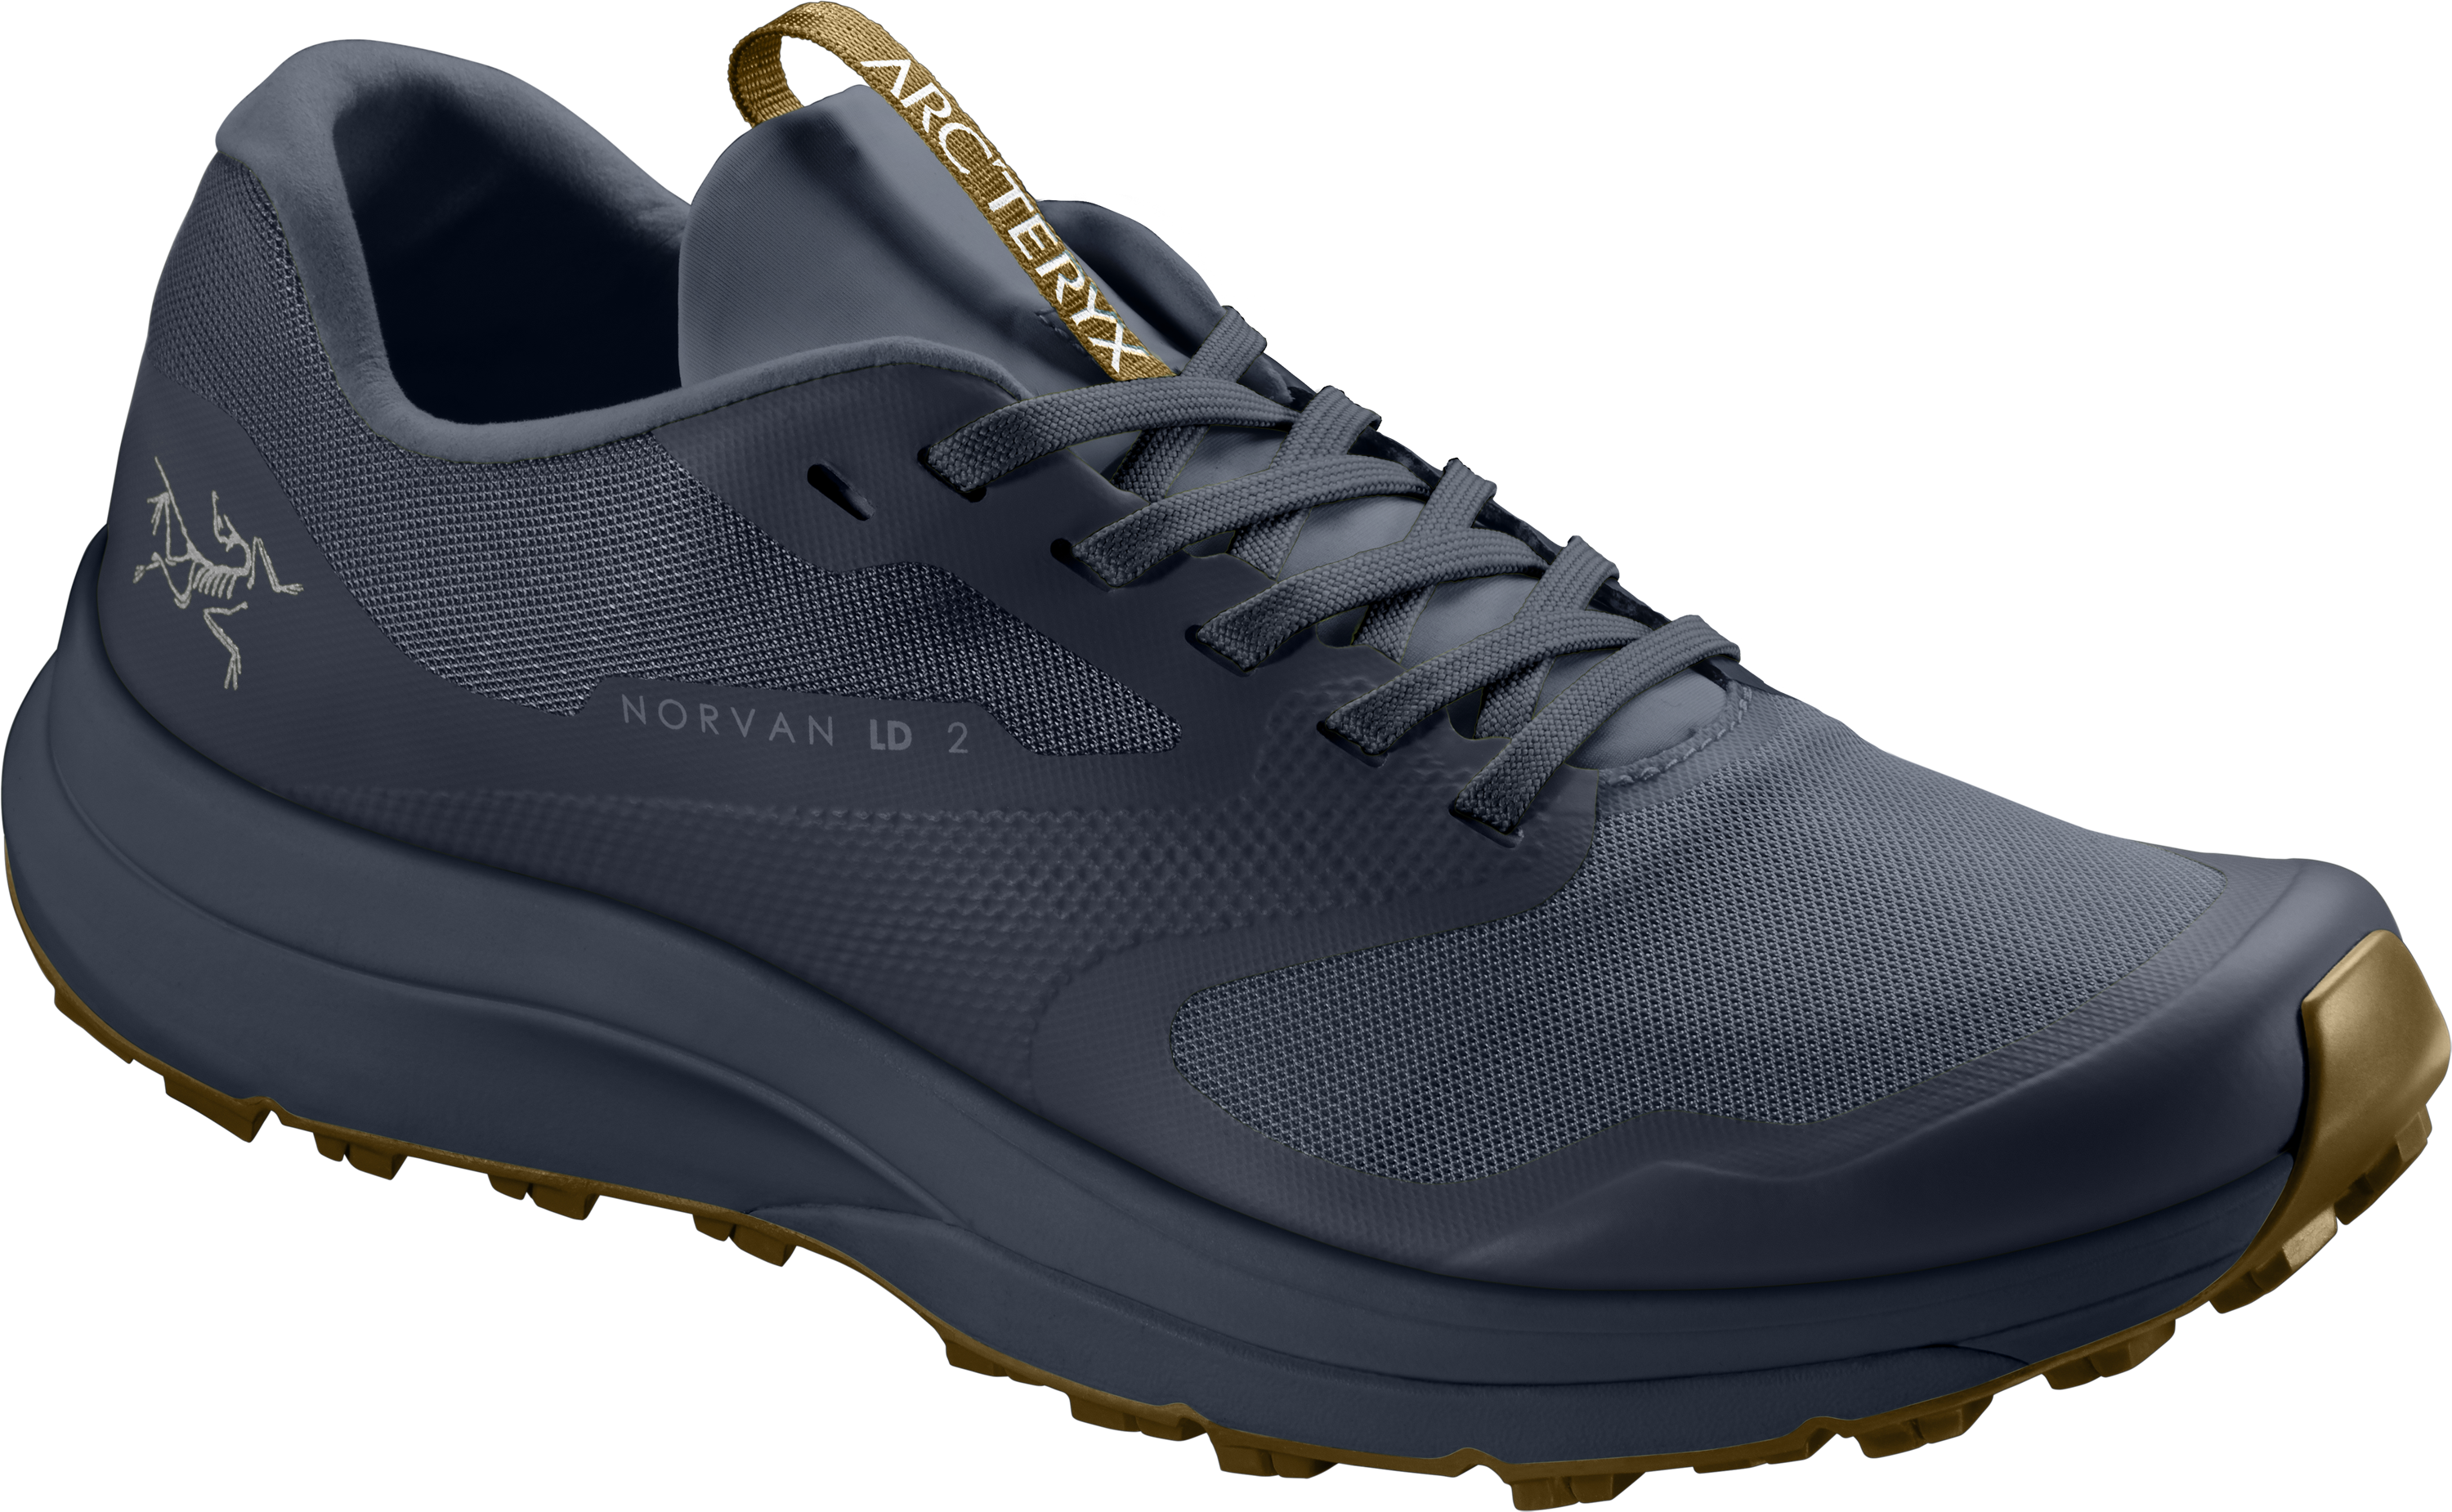 Arc'teryx Norvan LD 2 - Trail running shoes - Men's